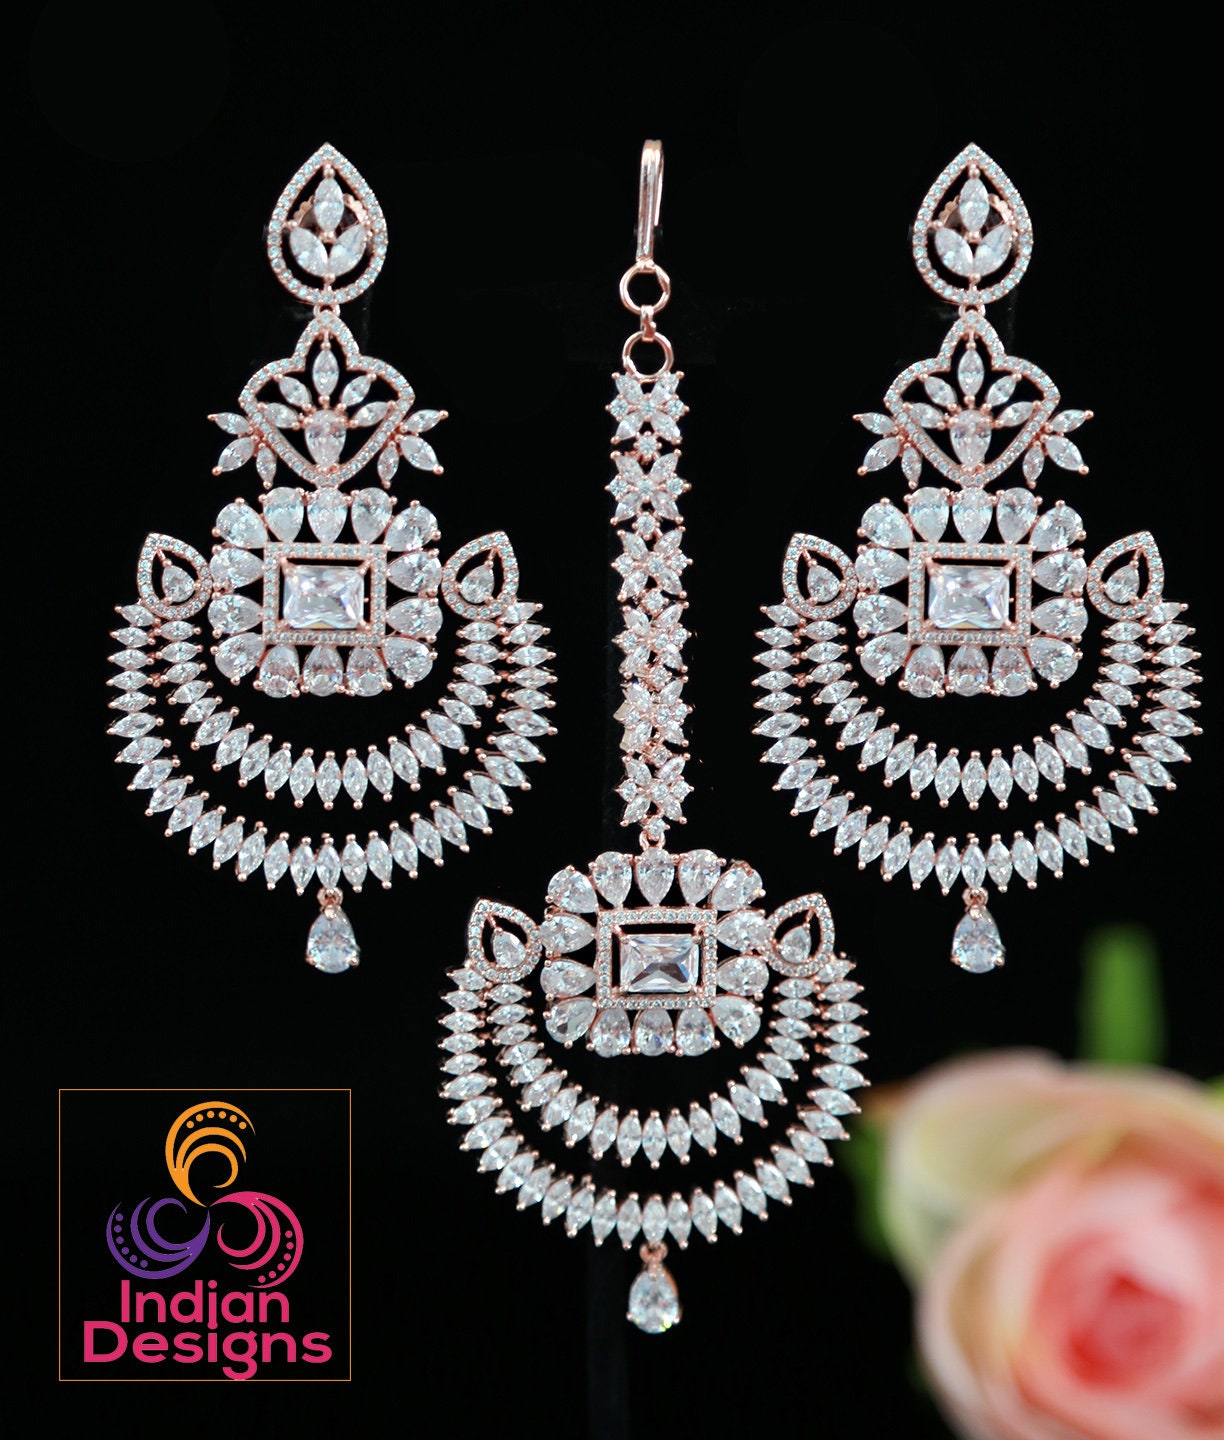 Chandbali crystal earrings tikka set Rose gold - Cz Color Stones | Punjabi earrings with maang tikka for wedding | Indian Designs collection